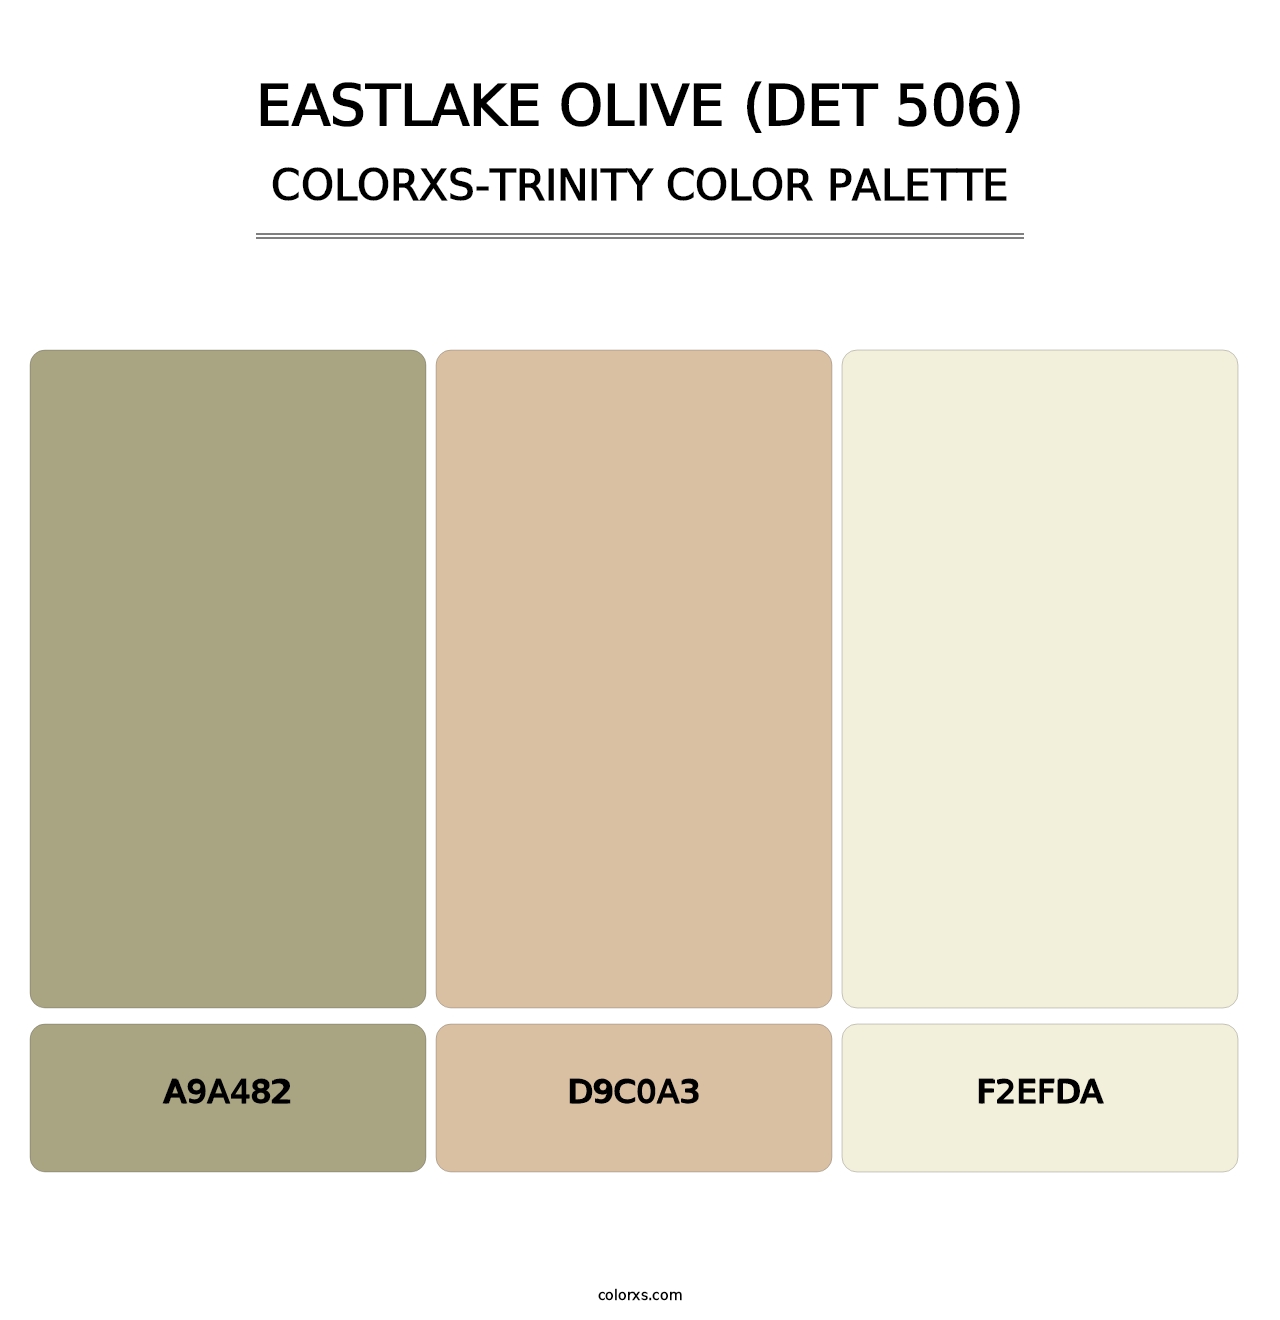 Eastlake Olive (DET 506) - Colorxs Trinity Palette